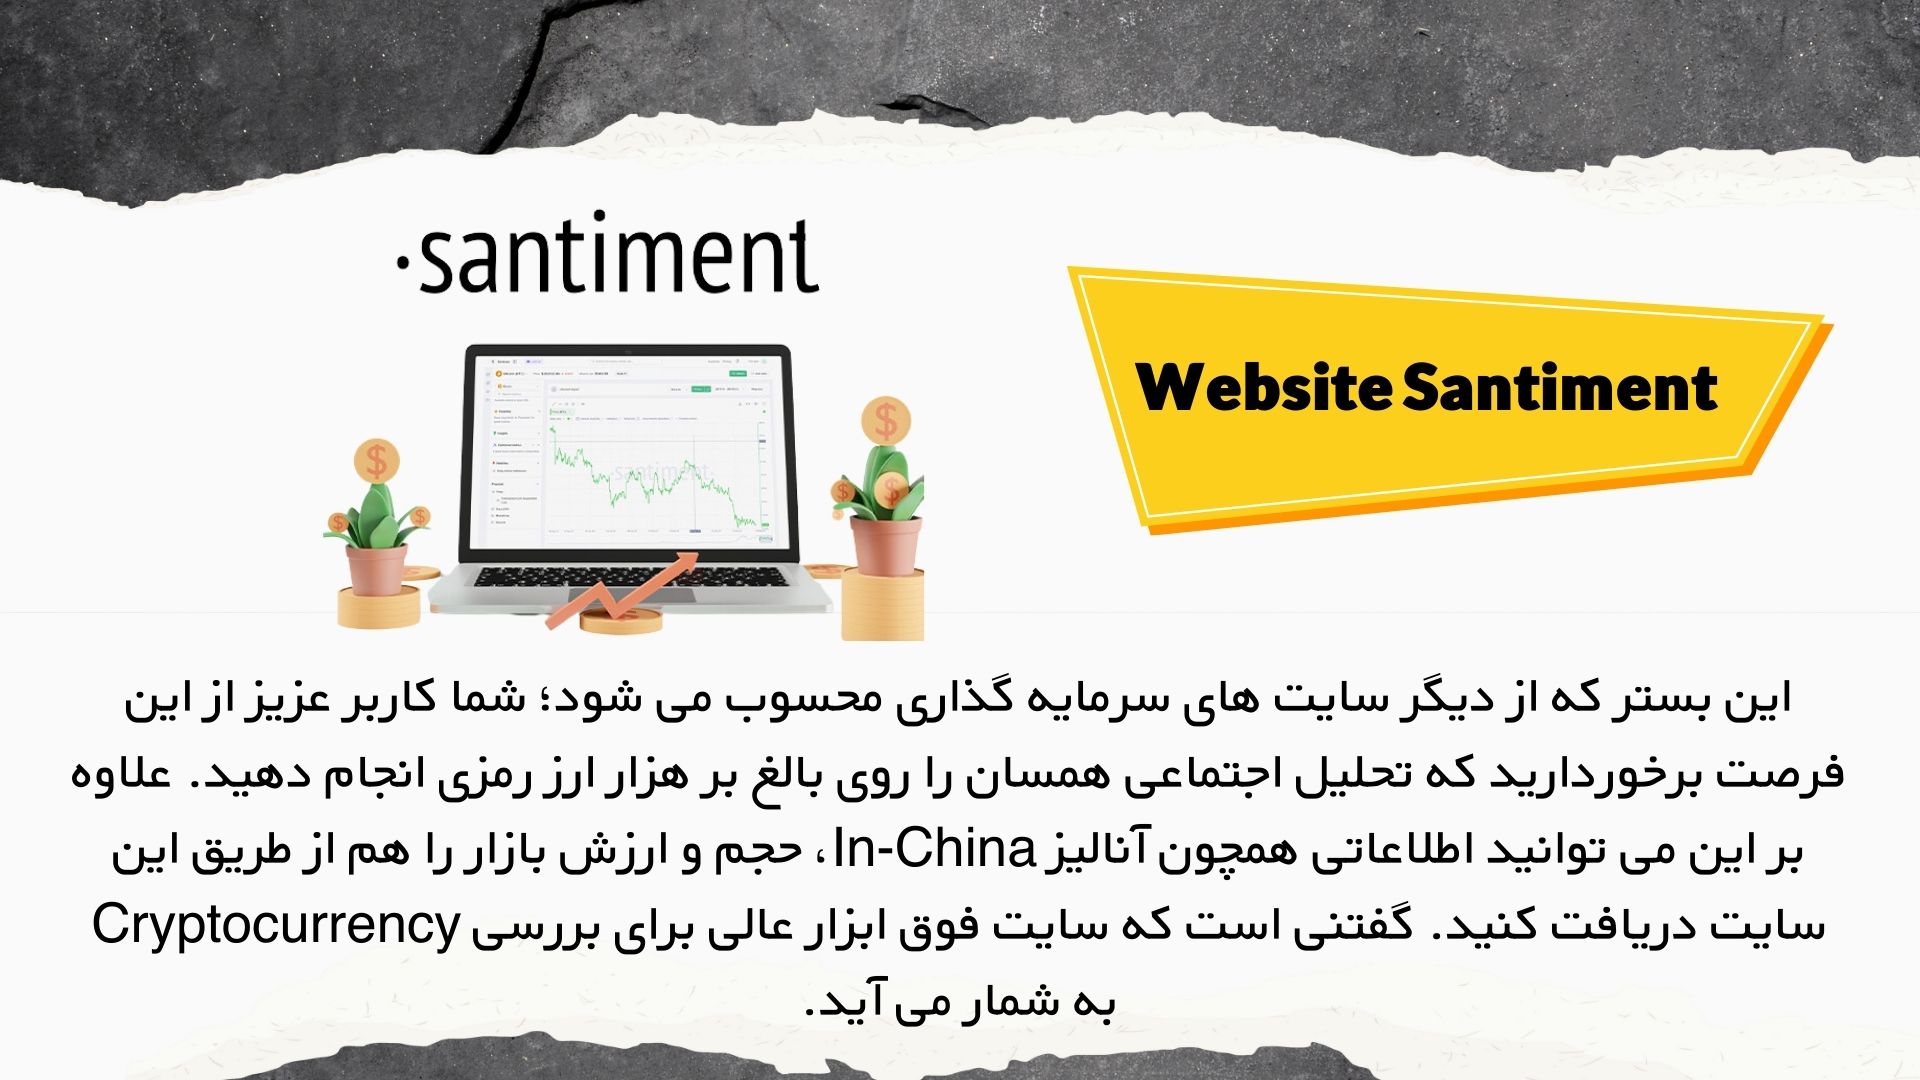 Website Santiment: